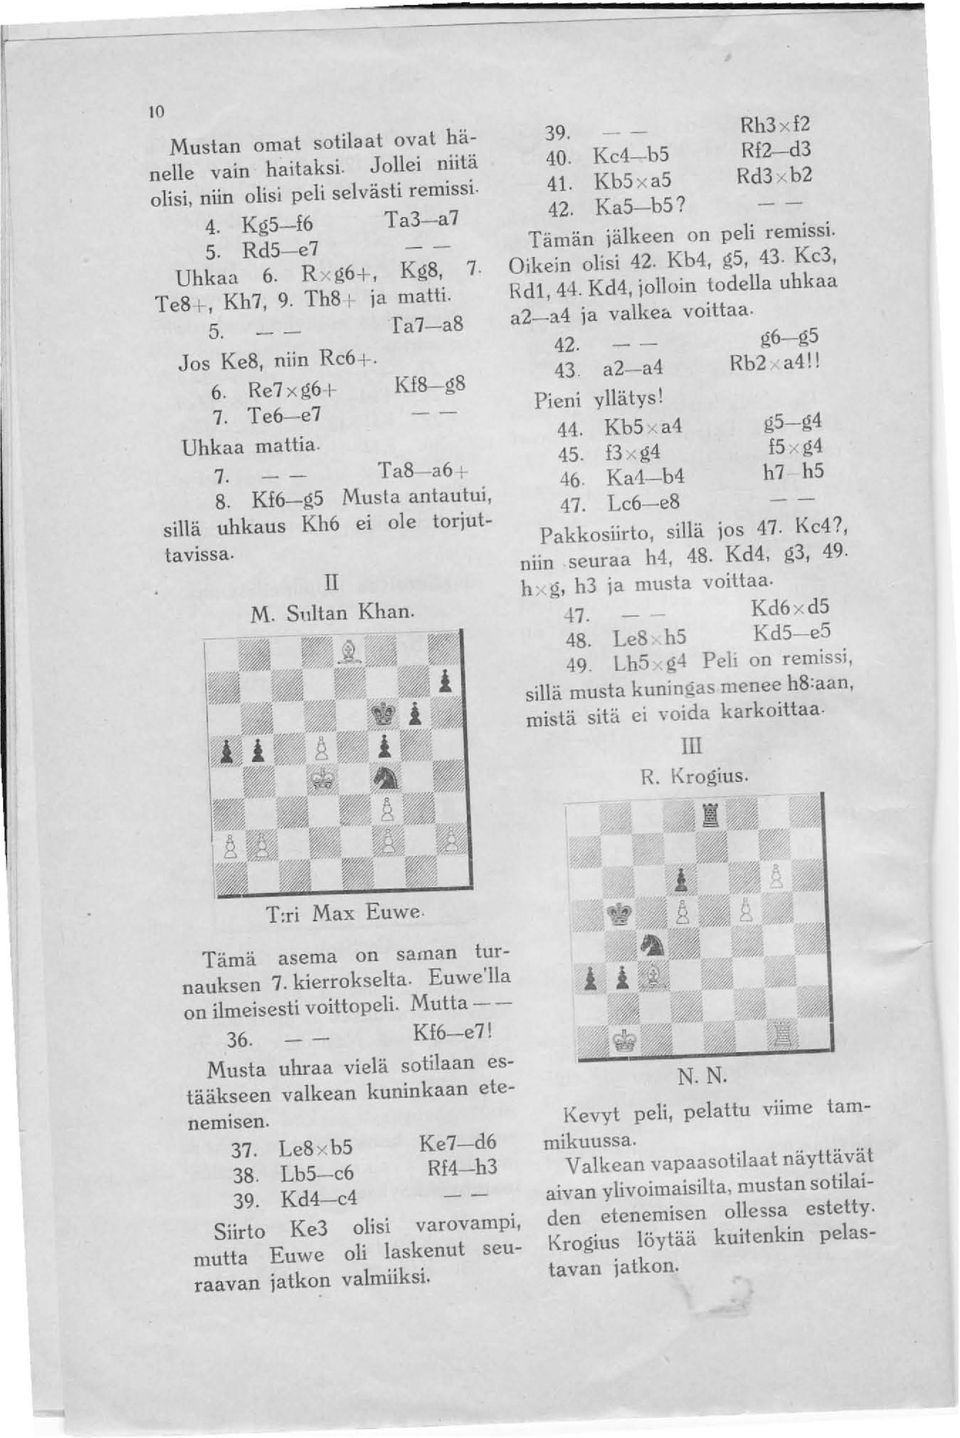 Rh3 x f2 Rf2-d3 Rd3 xb2 Tämän jälkeen on peli remissi. Oikein olisi 42. Kb4, g5, 43. Kc3, Rdl, 44. Kd4, jolloin todella uhkaa a2-a4 ja valkea. voittaa. 42. g6-g5 43 a2-a4 Rb2 a4!! Pieni yllätys! 44. Kb5 x a4 45.